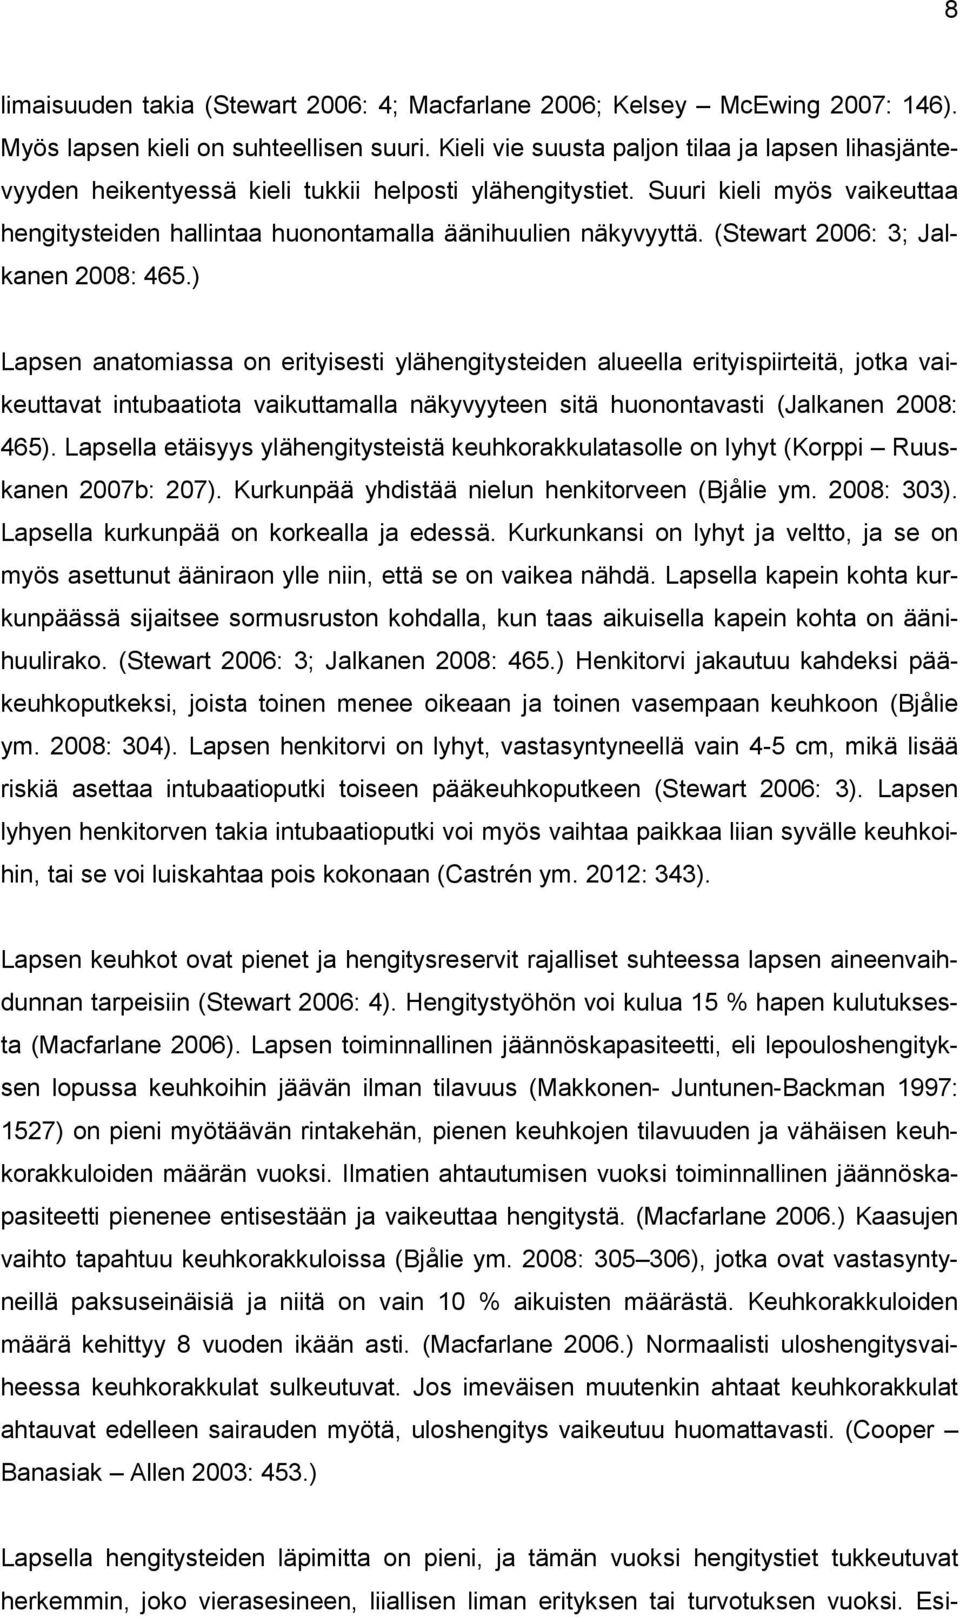 (Stewart 2006: 3; Jalkanen 2008: 465.